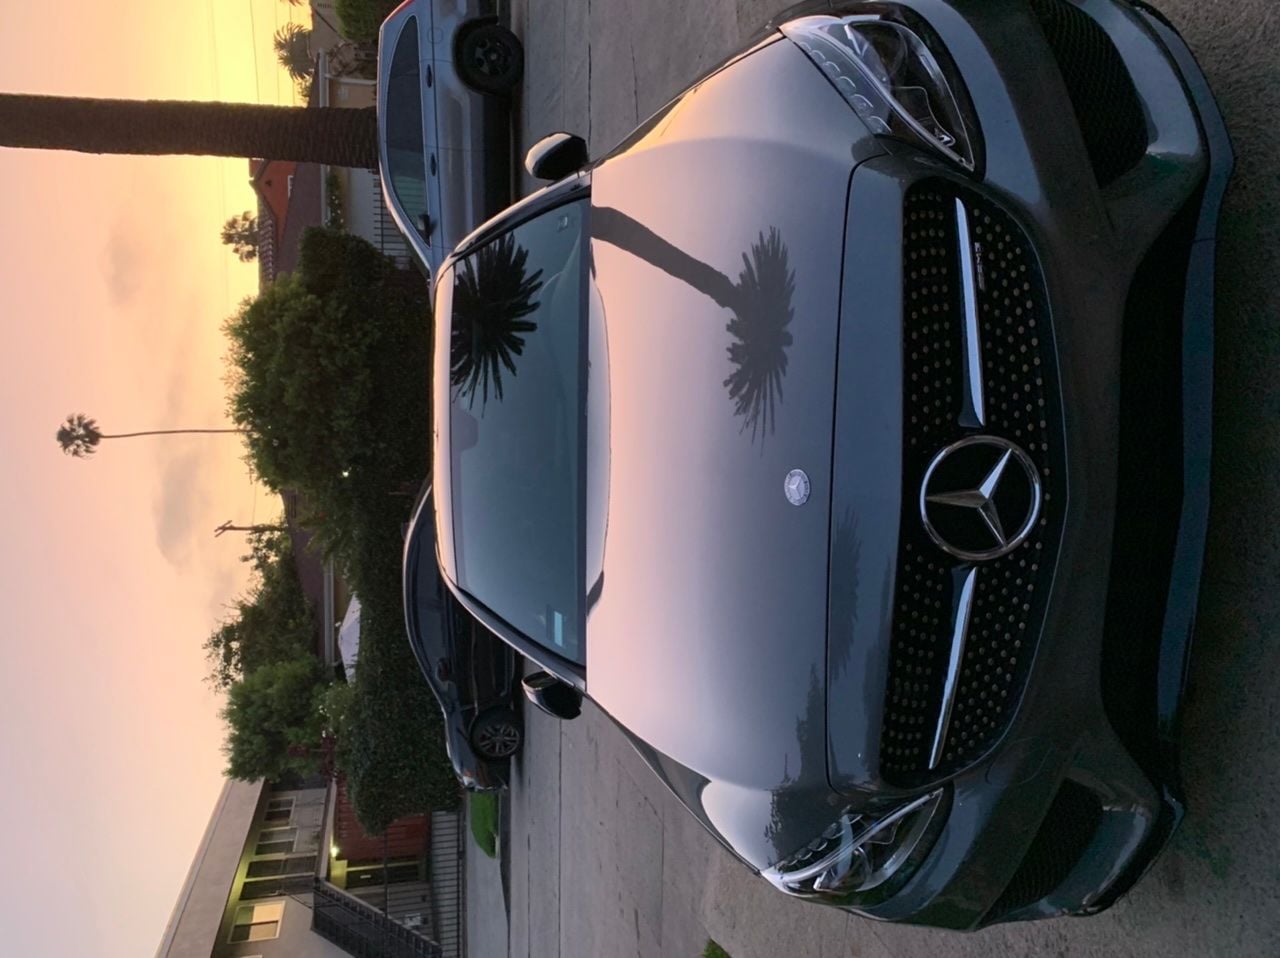 2017 Mercedes-Benz C43 AMG - 2017 Selenite Gray Mercedes C43 AMG sedan with Performance Exhaust Lease Transfer 517 - Used - VIN 55SWF6EB2HU225487 - 26,000 Miles - 6 cyl - AWD - Automatic - Sedan - Gray - Los Angeles, CA 90016, United States